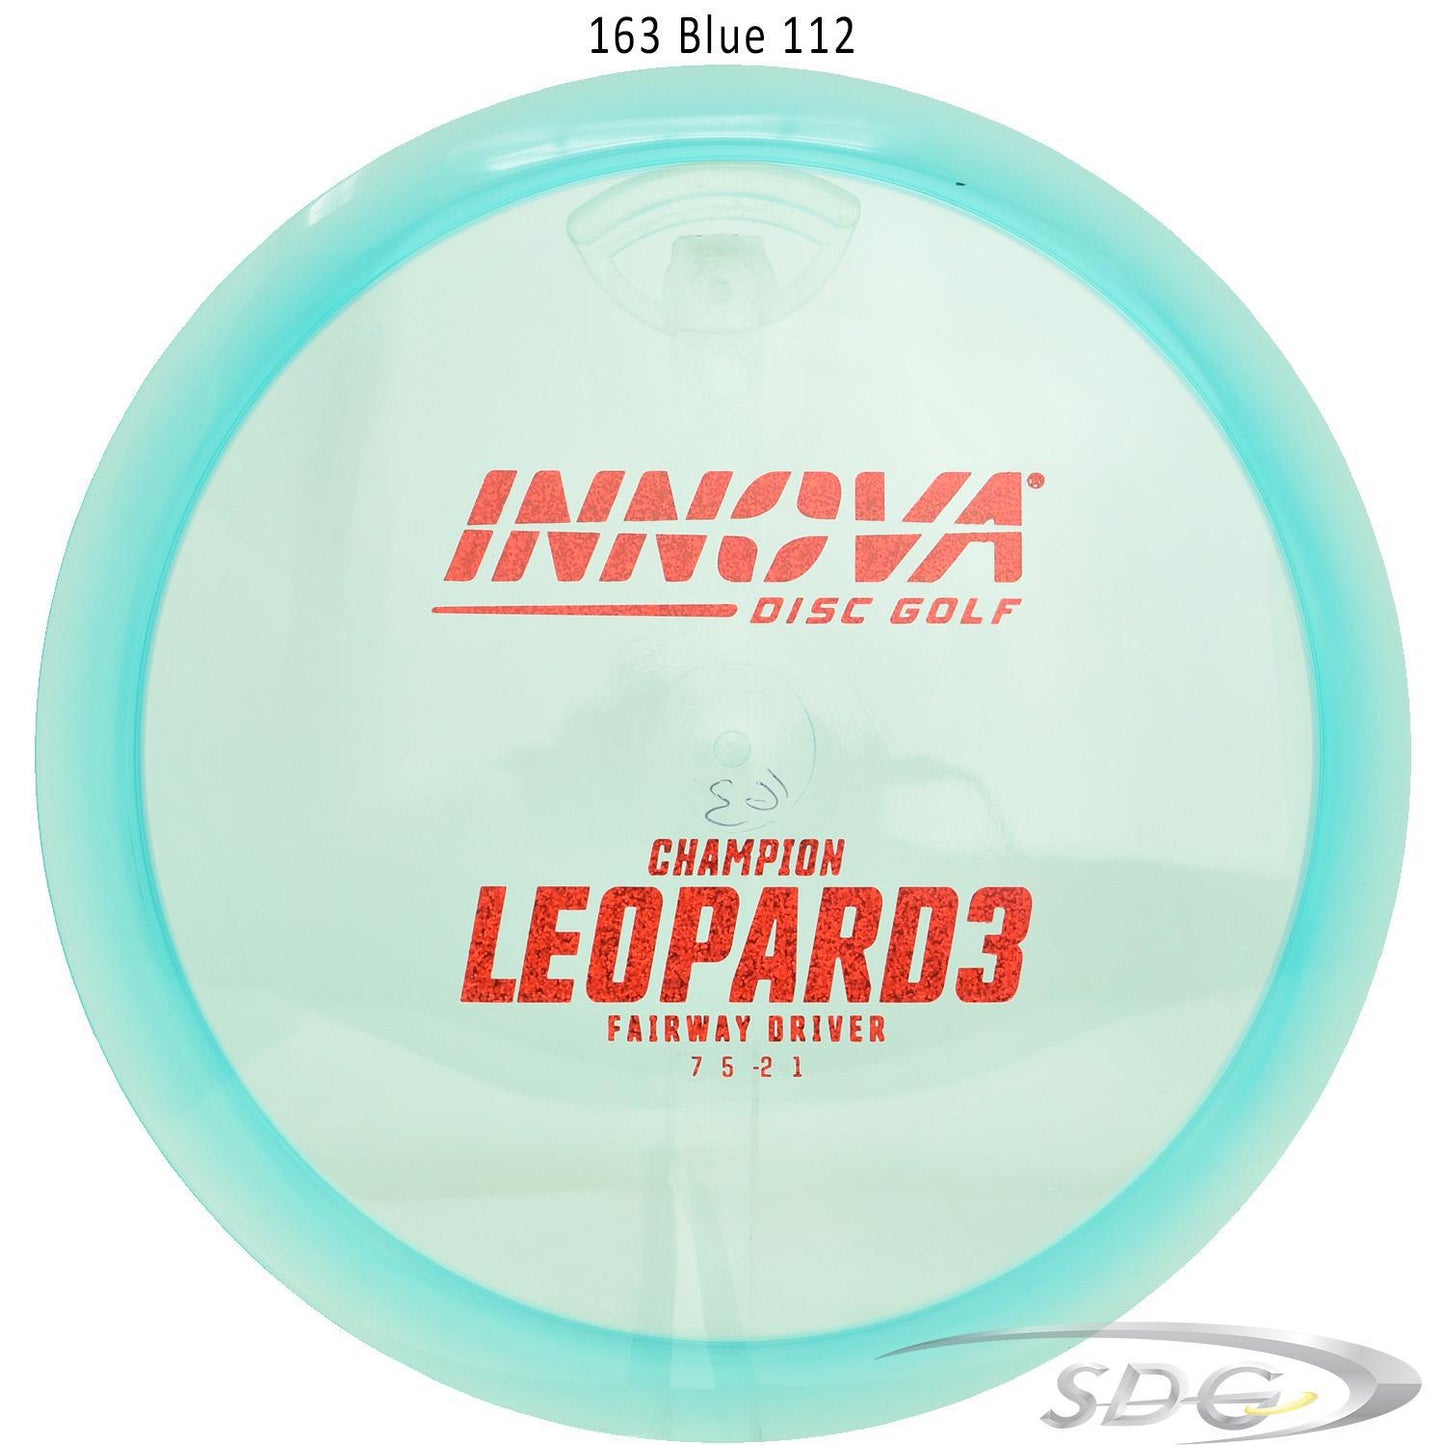 innova-champion-leopard3-disc-golf-fairway-driver 163 Blue 112 